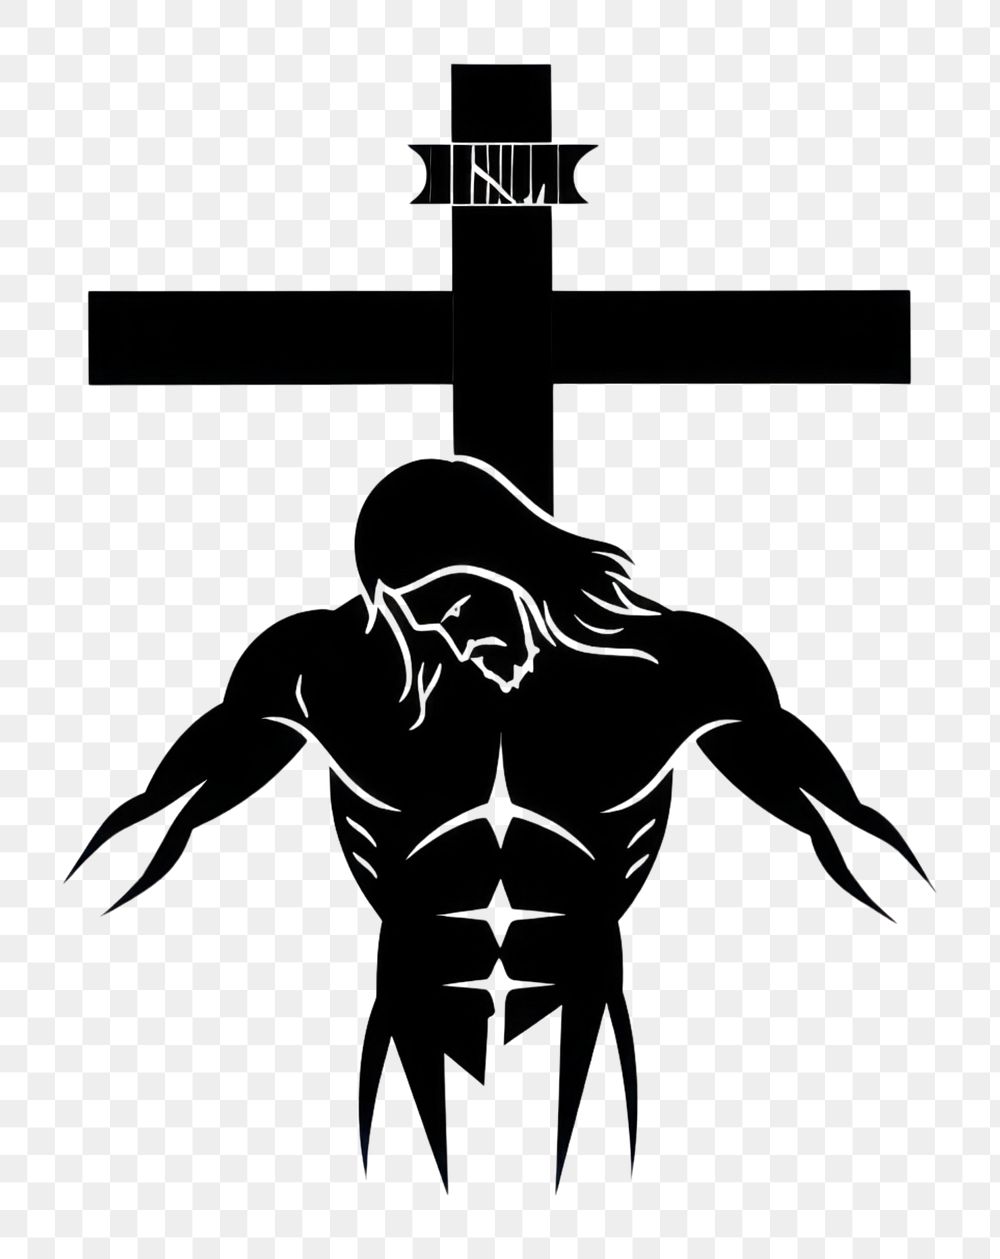 PNG Black minimalist jesus christ on the cross logo design silhouette drawing symbol.